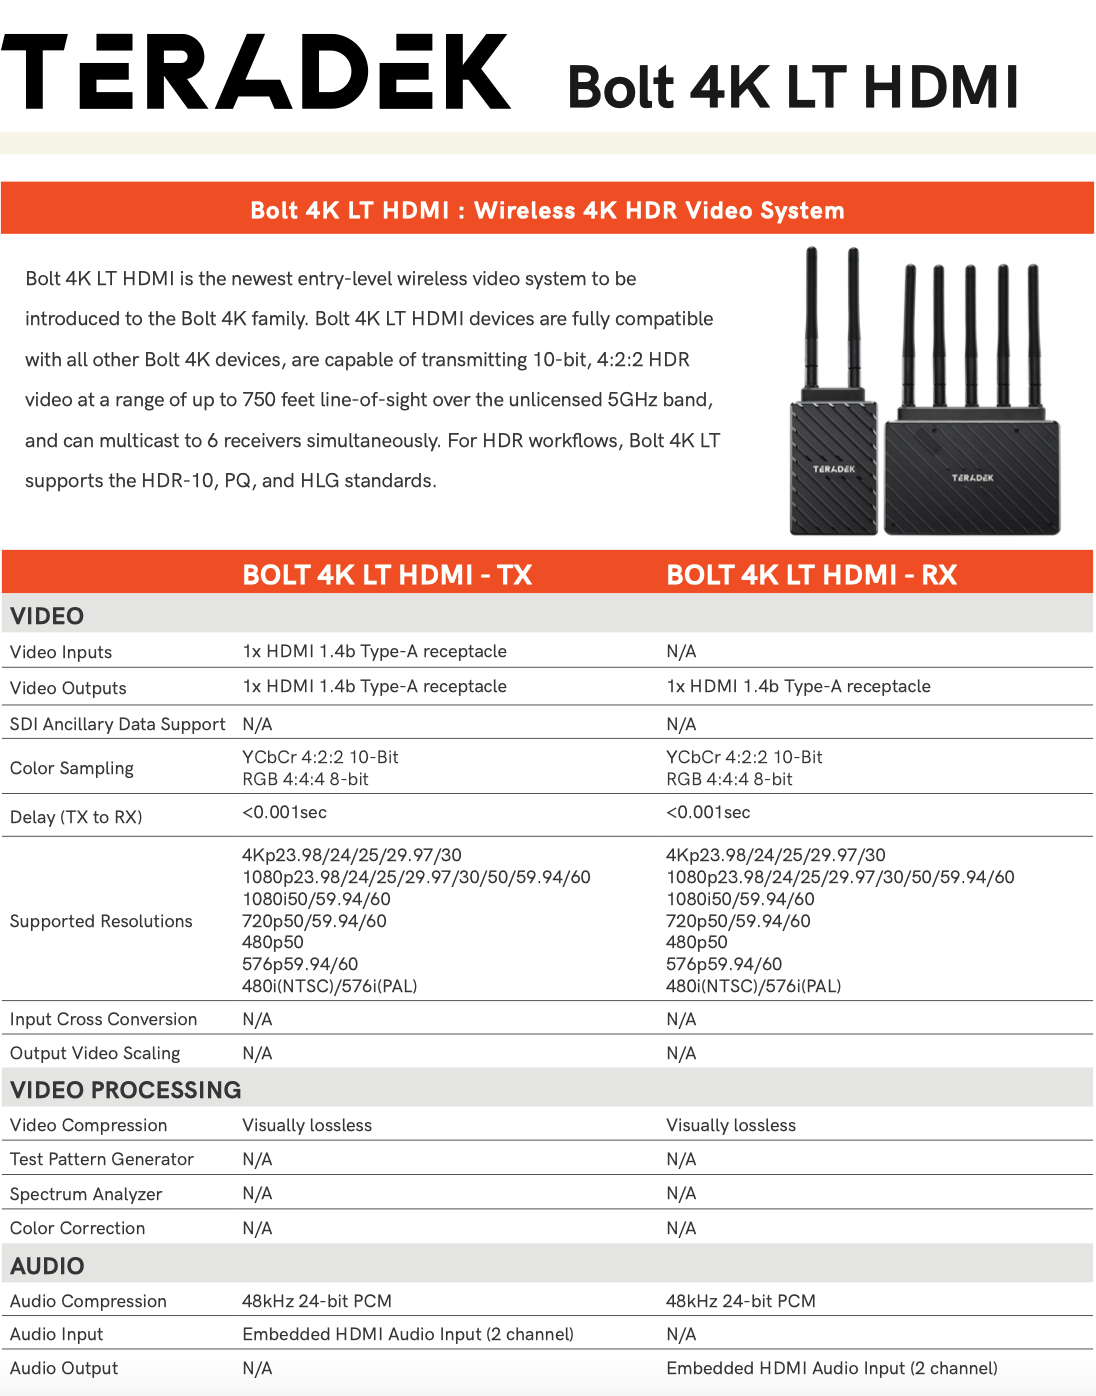 Teradek Bolt 4K LT HDMI TX/RX Spec